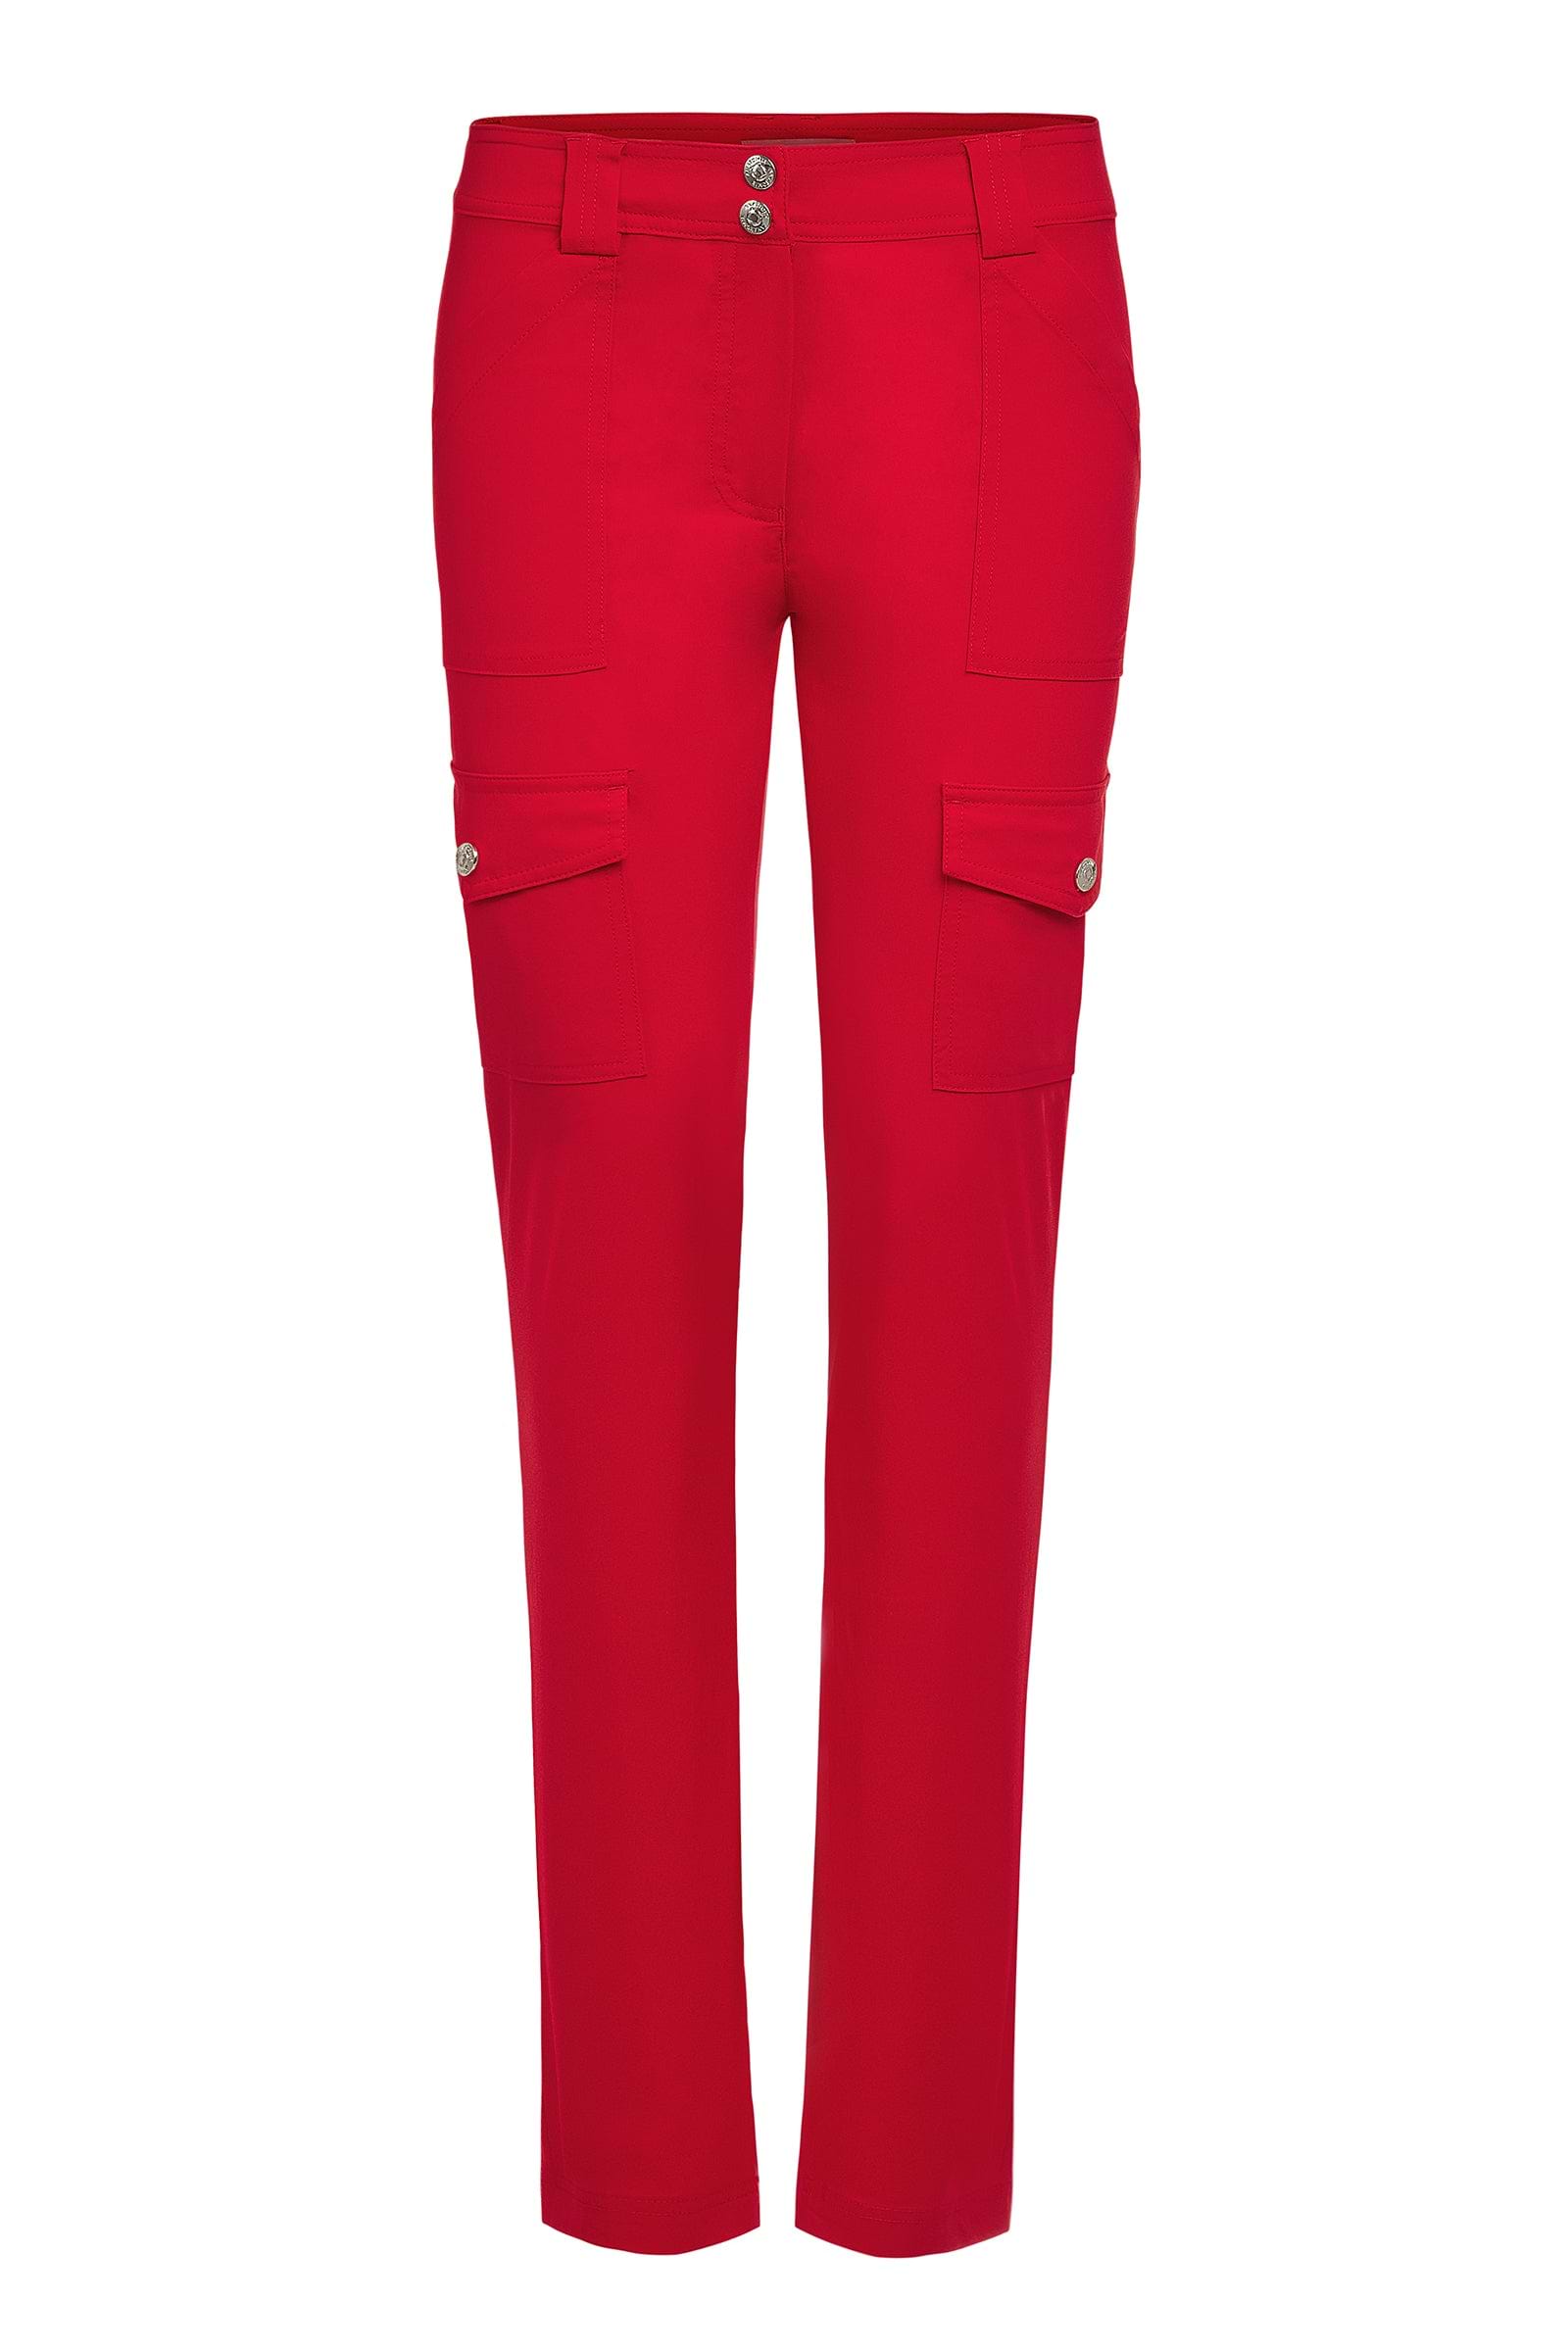 Shop G-Star RAW Zip-Pocket 3D Skinny Cargo Pants | Saks Fifth Avenue